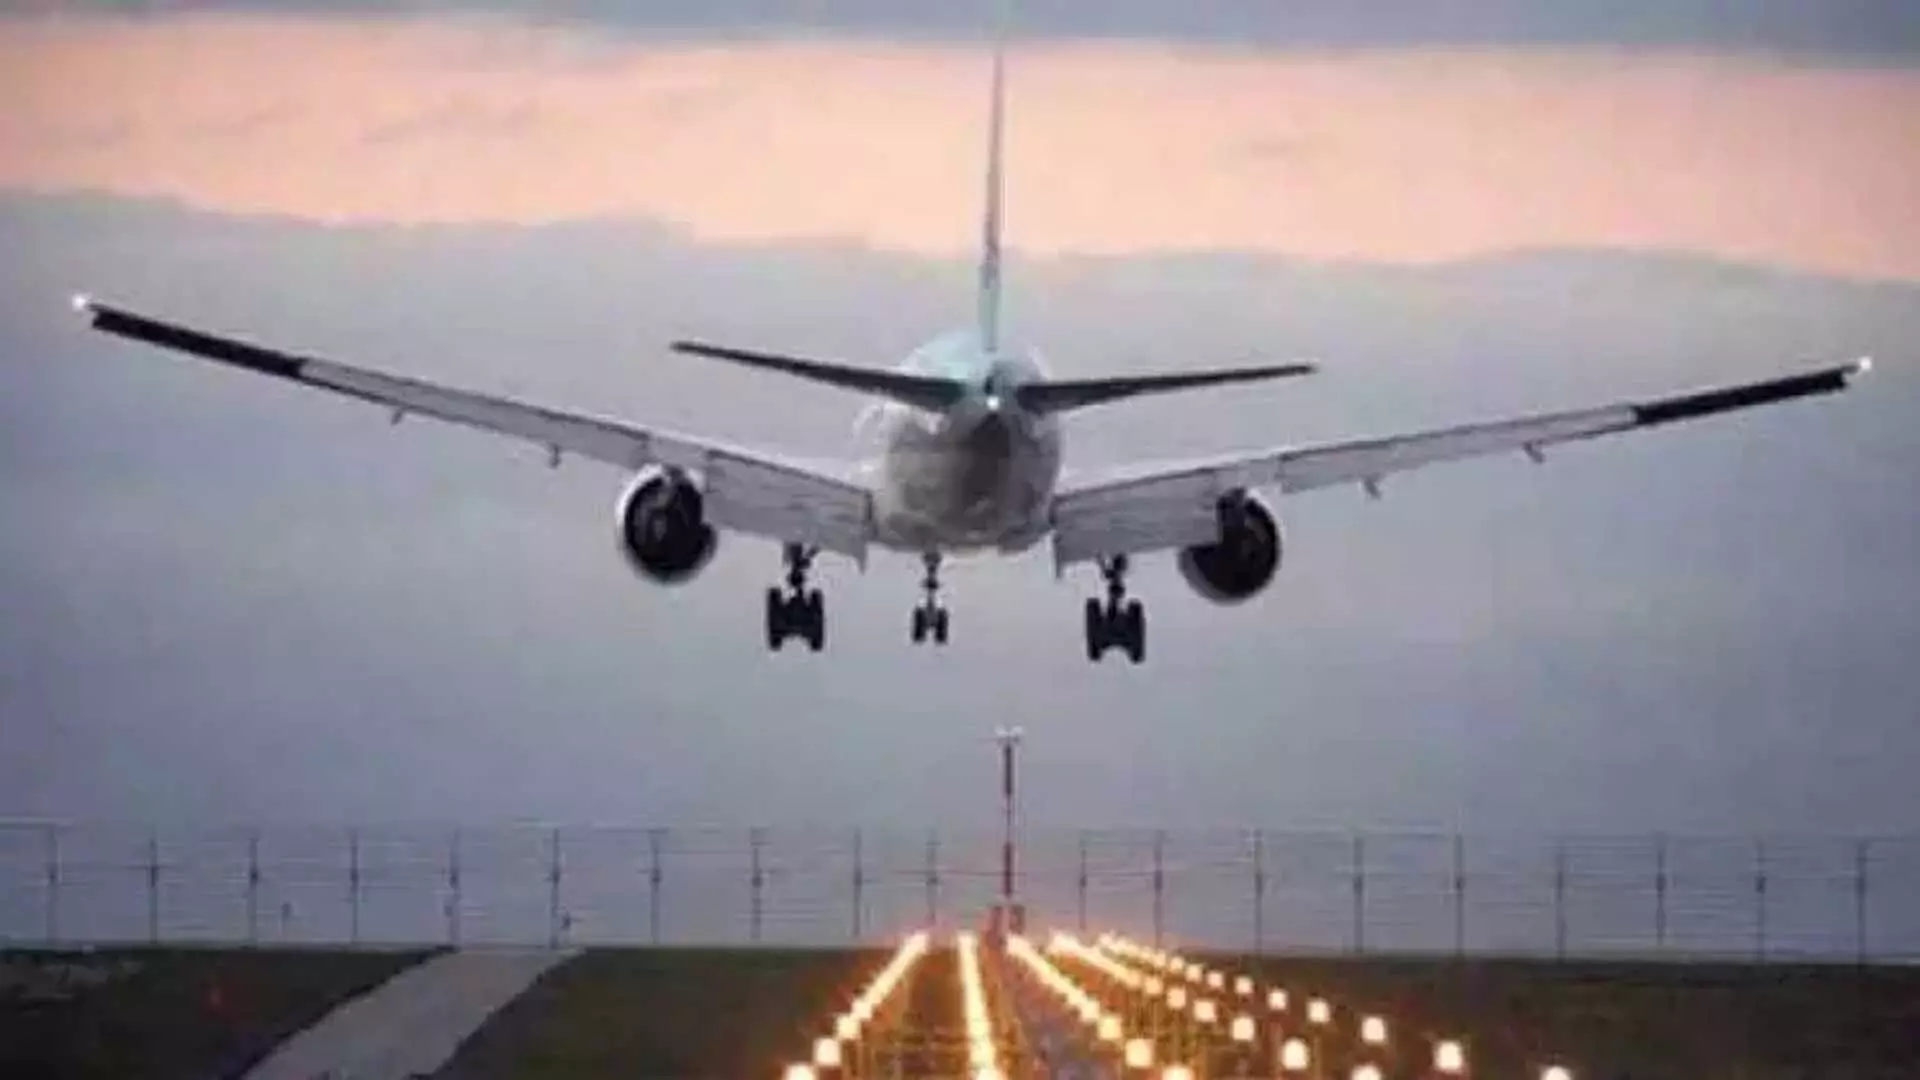 Telangana का ममनूर हवाई अड्डा कार्यात्मक हवाई अड्डा बनने के लिए तैयार